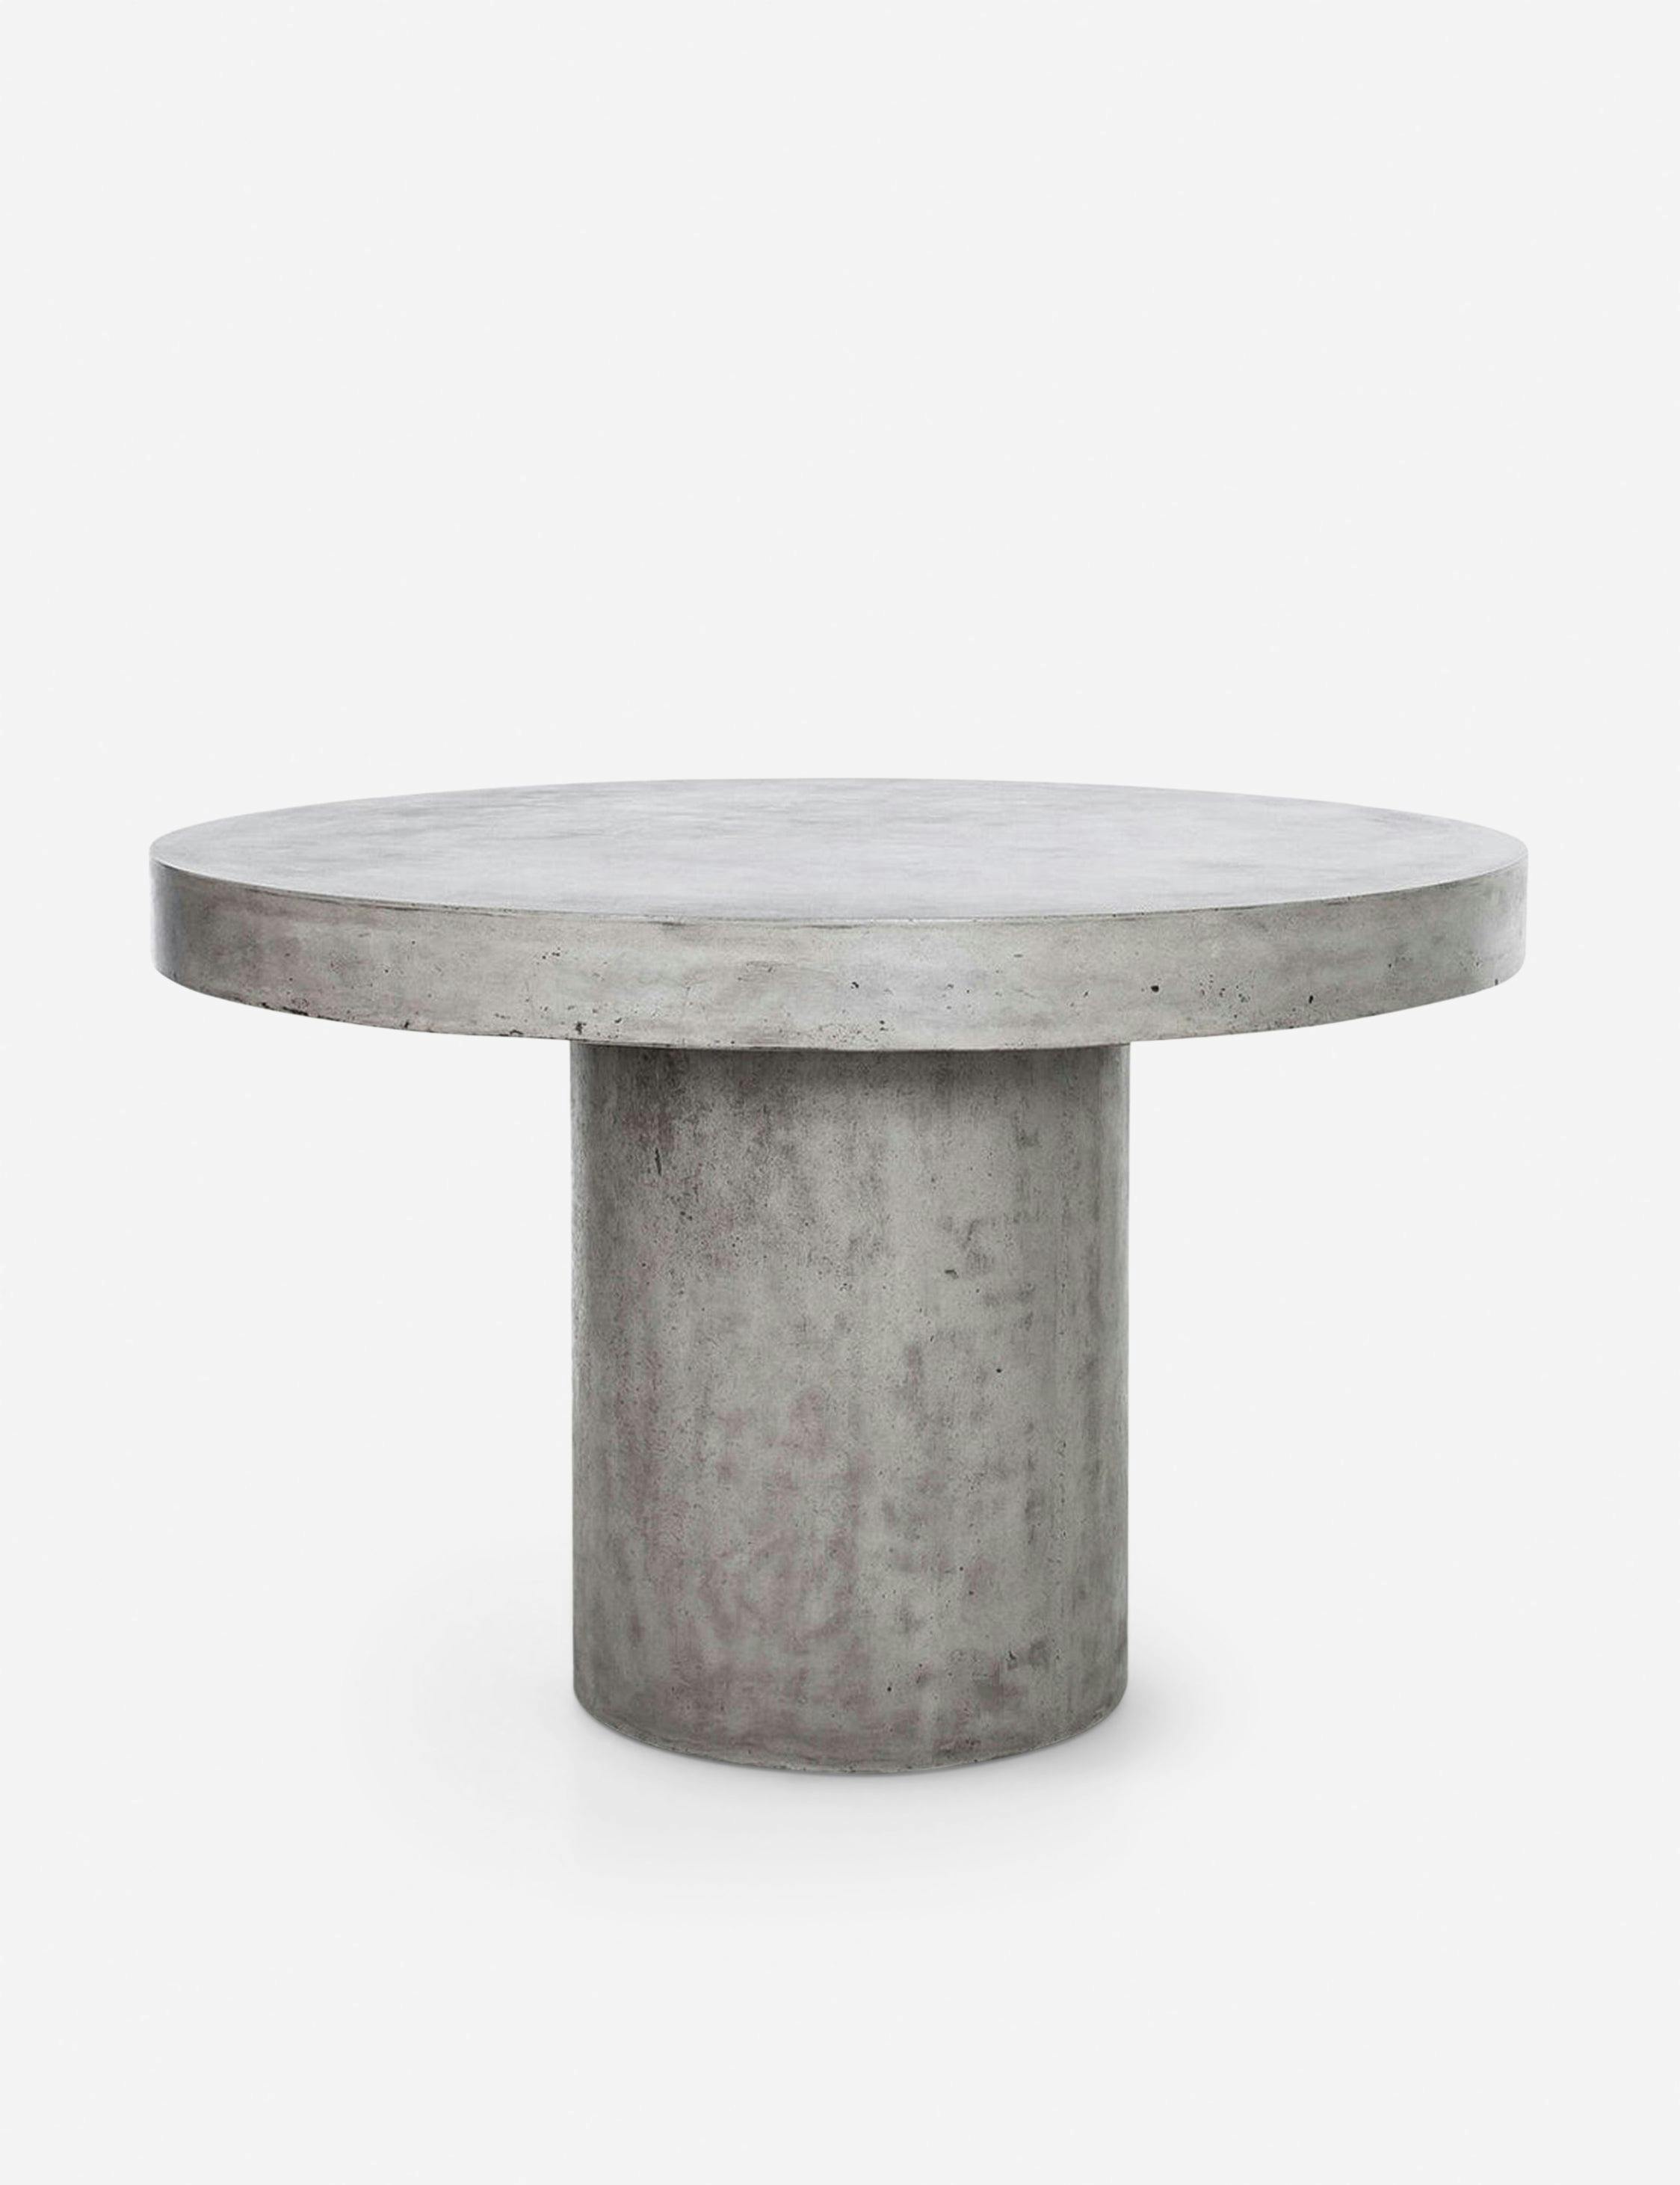 Stein Round Grey Indoor/Outdoor Dining Table